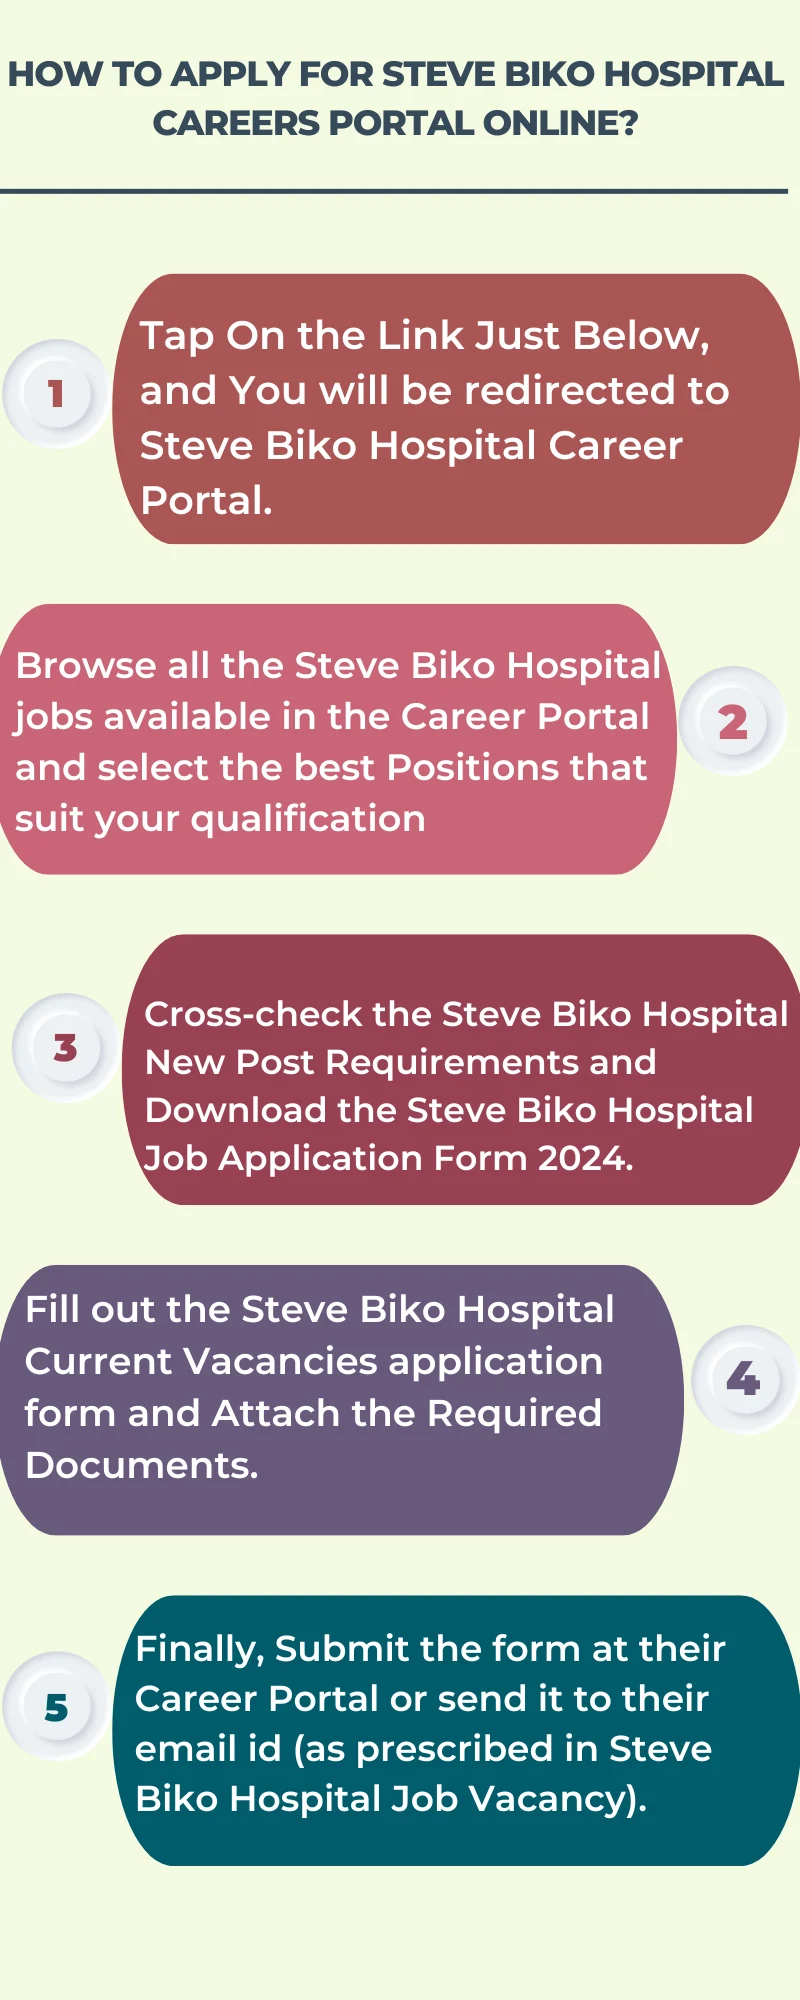 How To Apply for Steve Biko Hospital Careers Portal Online?